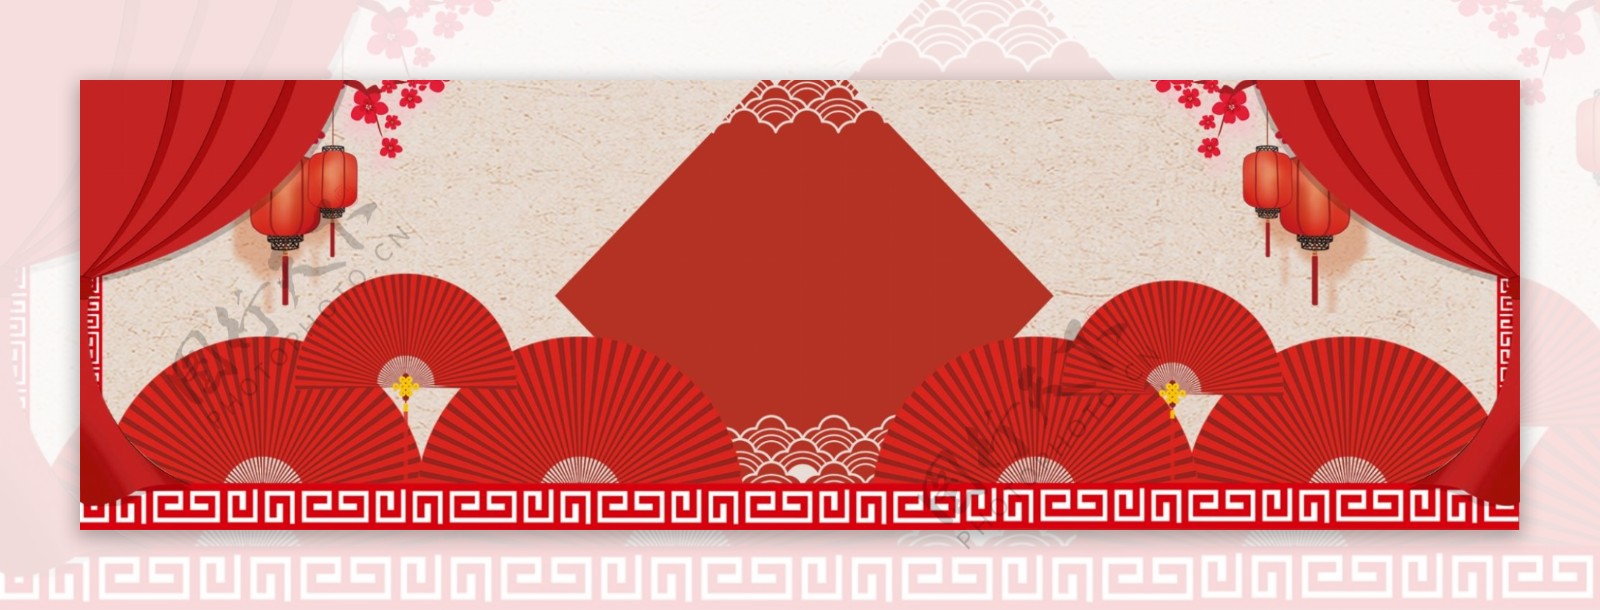 中国风新年中国年banner背景